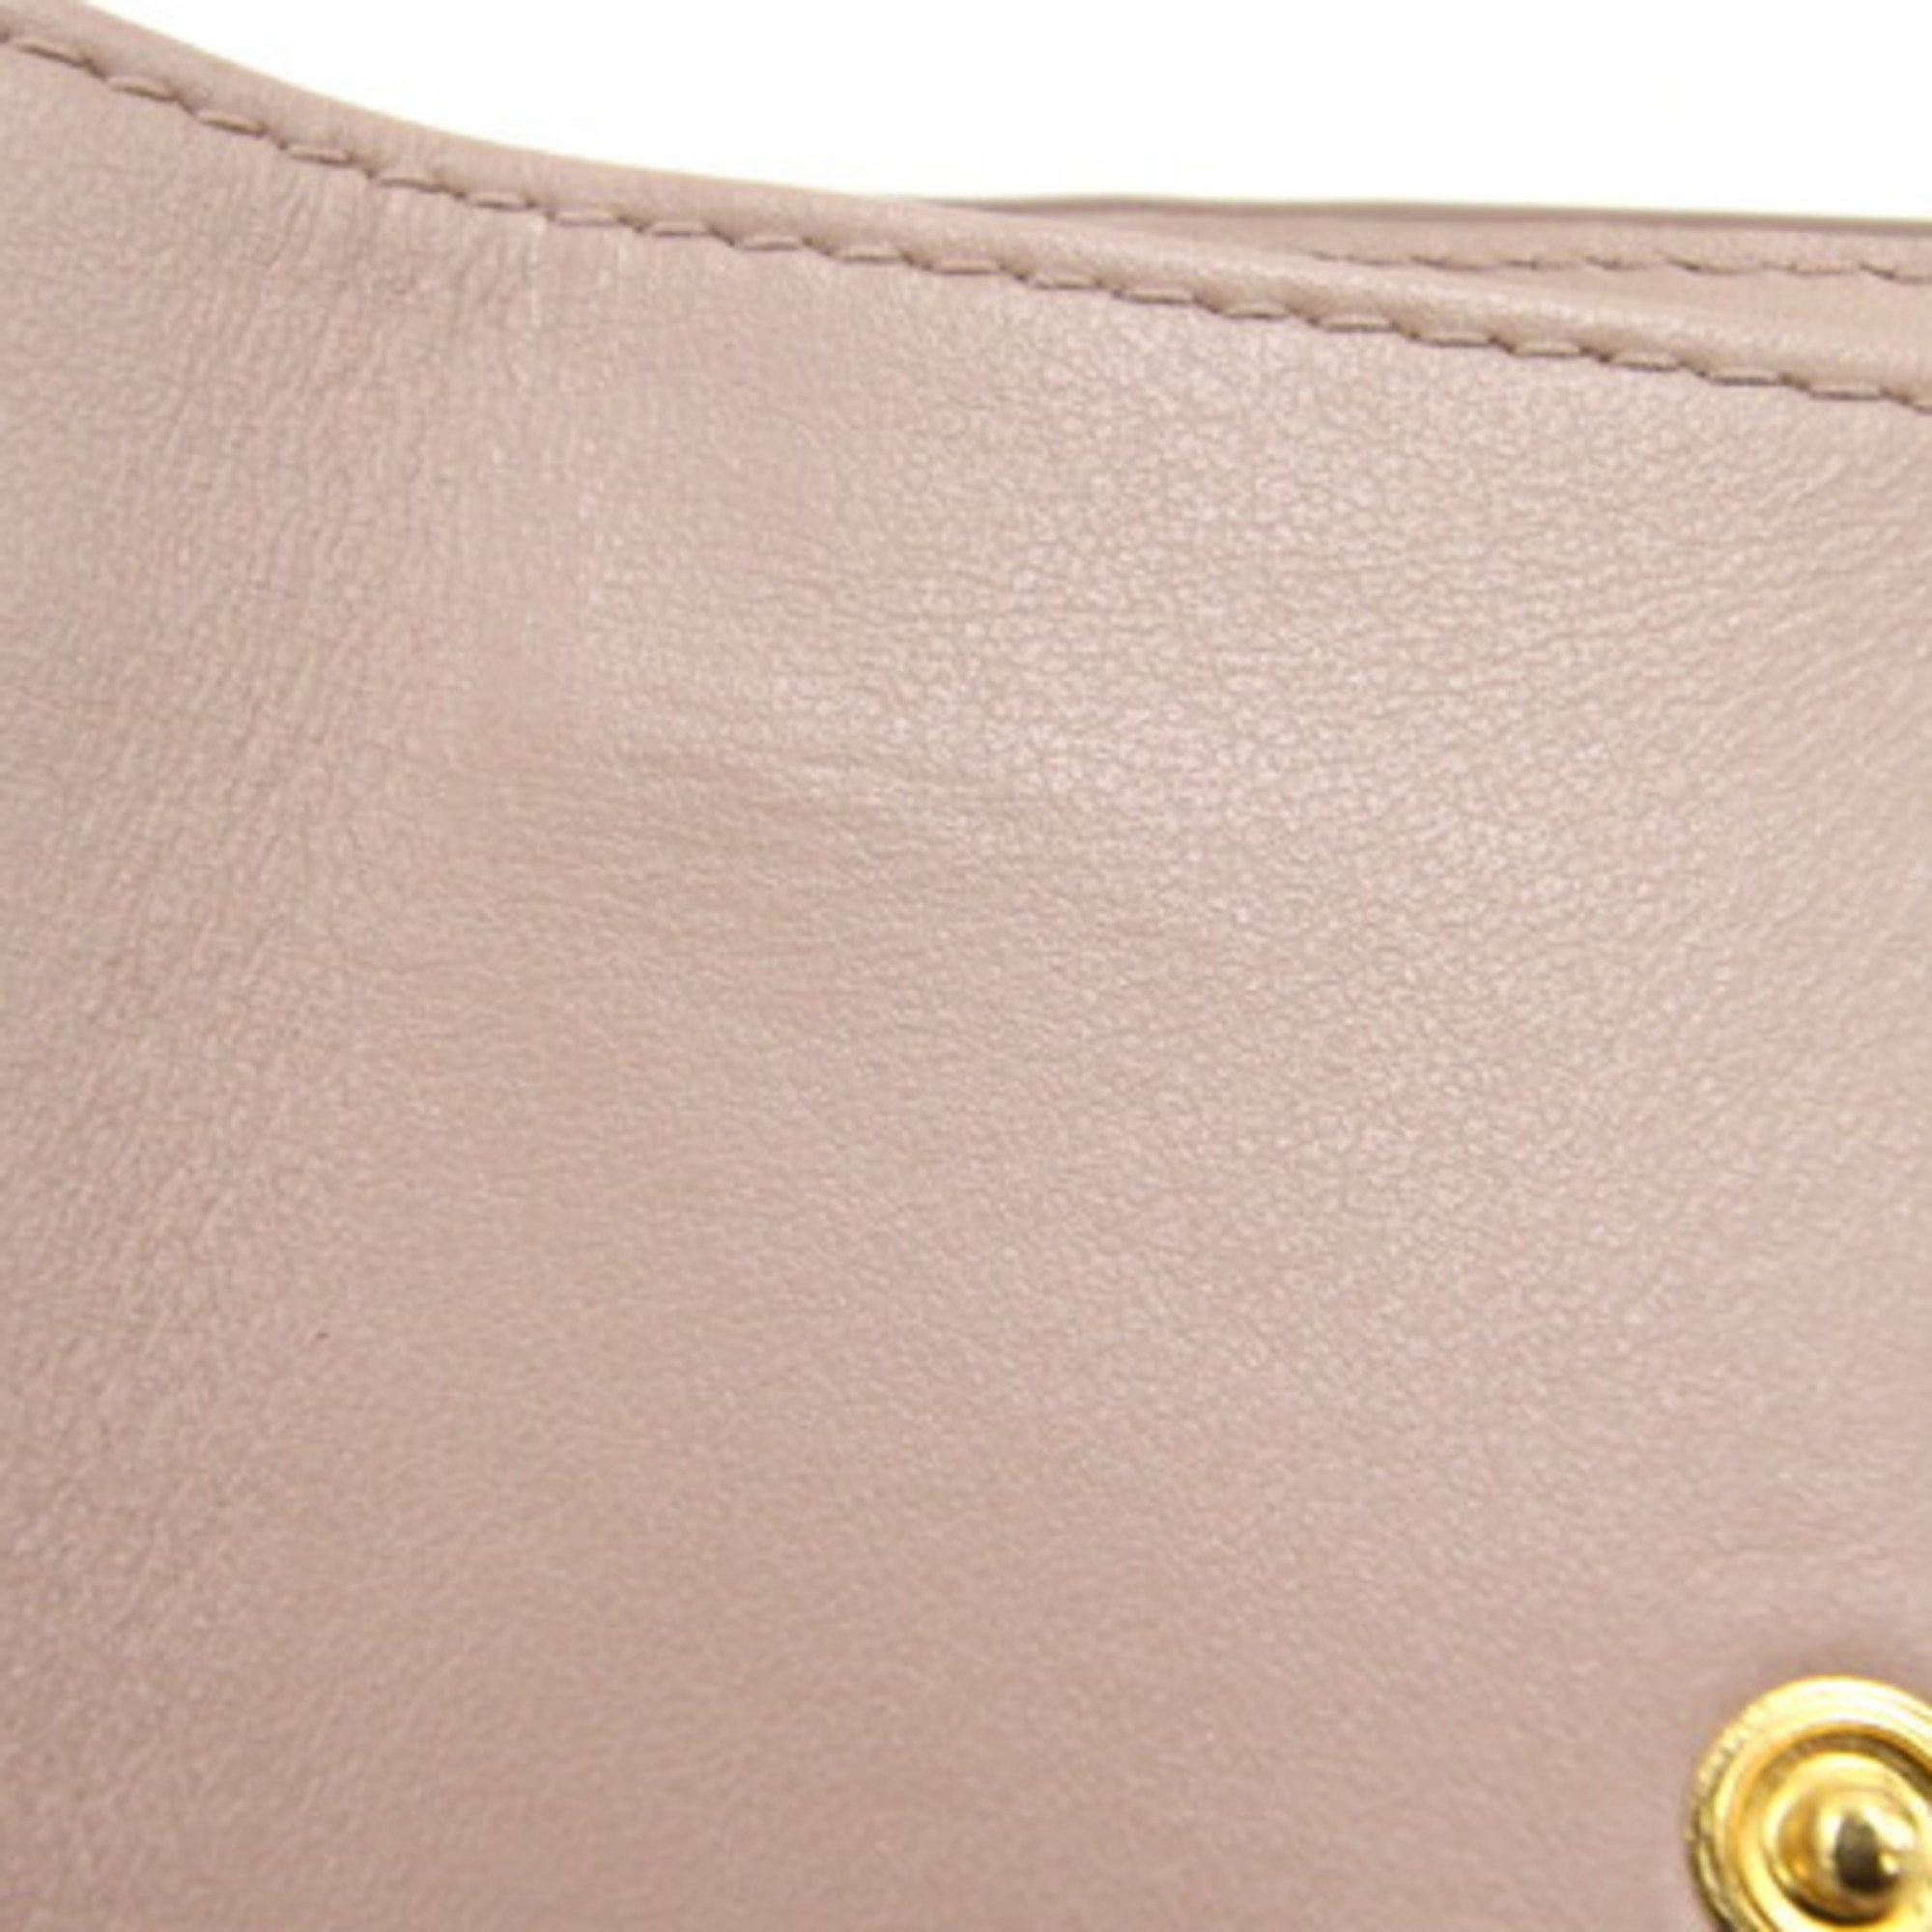 Prada Tri-fold Wallet 1MH021 Beige Leather Compact Small Women's PRADA